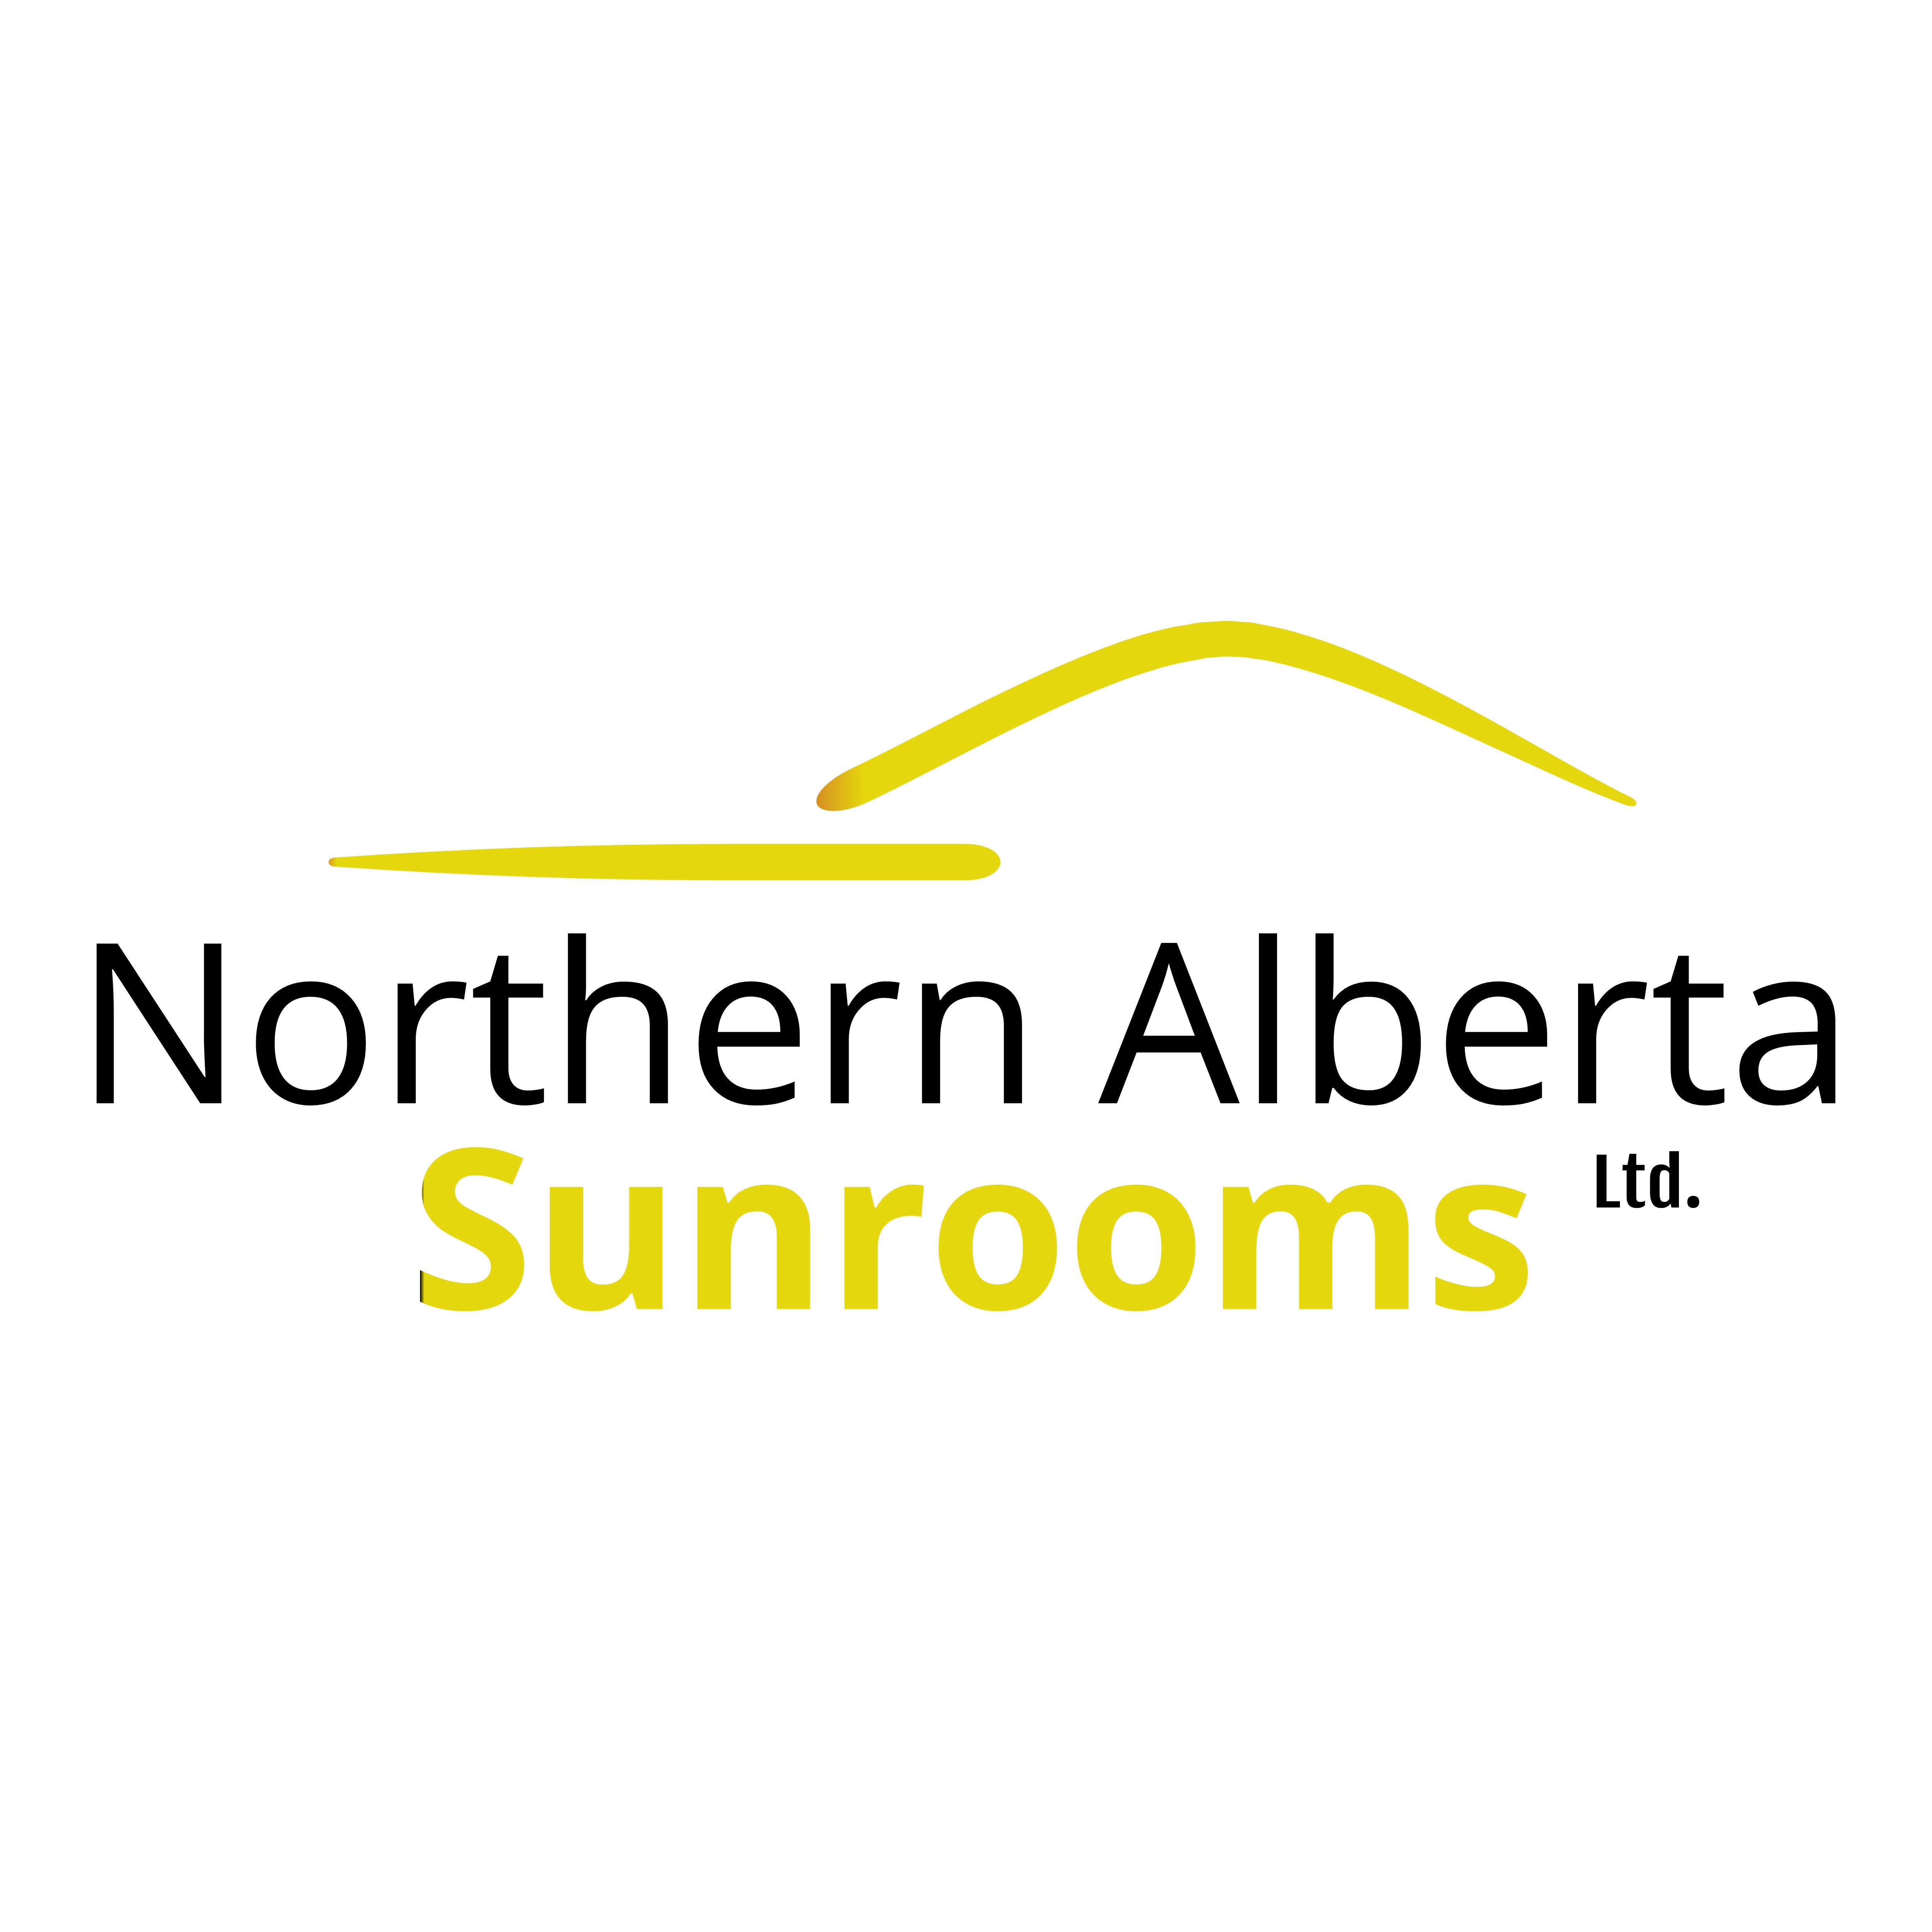 Northern Alberta Sunrooms Ltd.